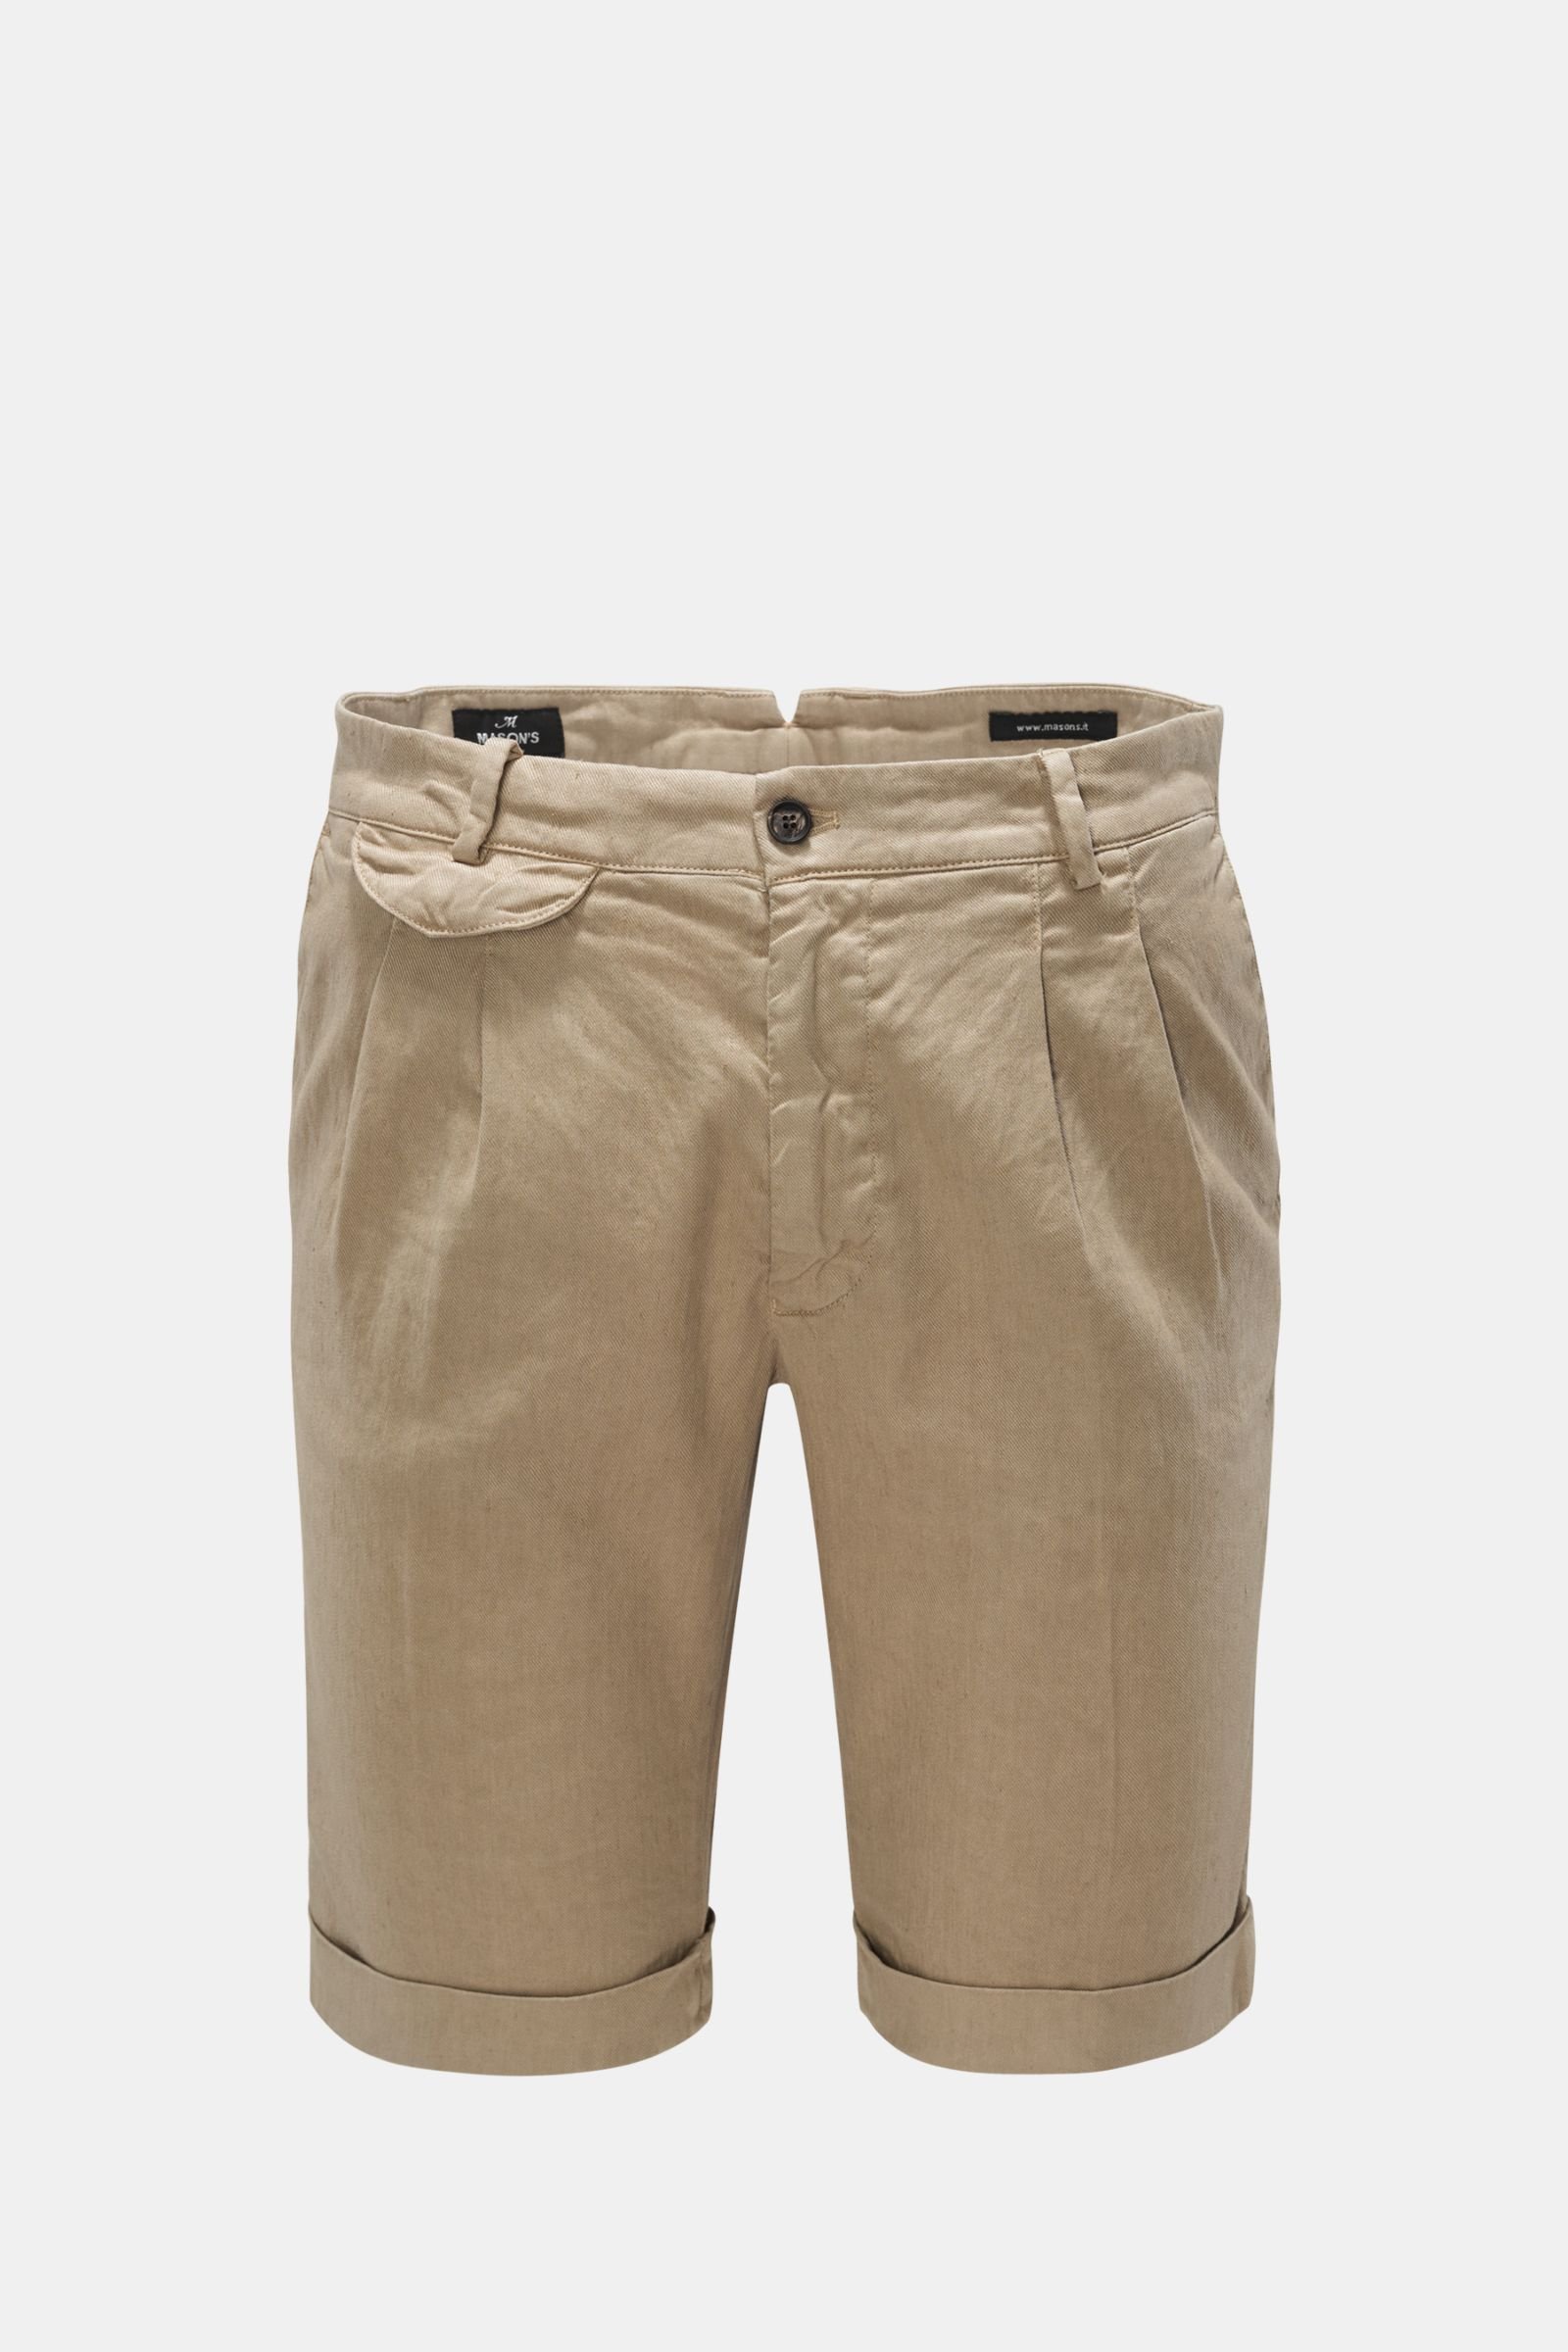 Bermuda shorts 'Amalfi' light brown